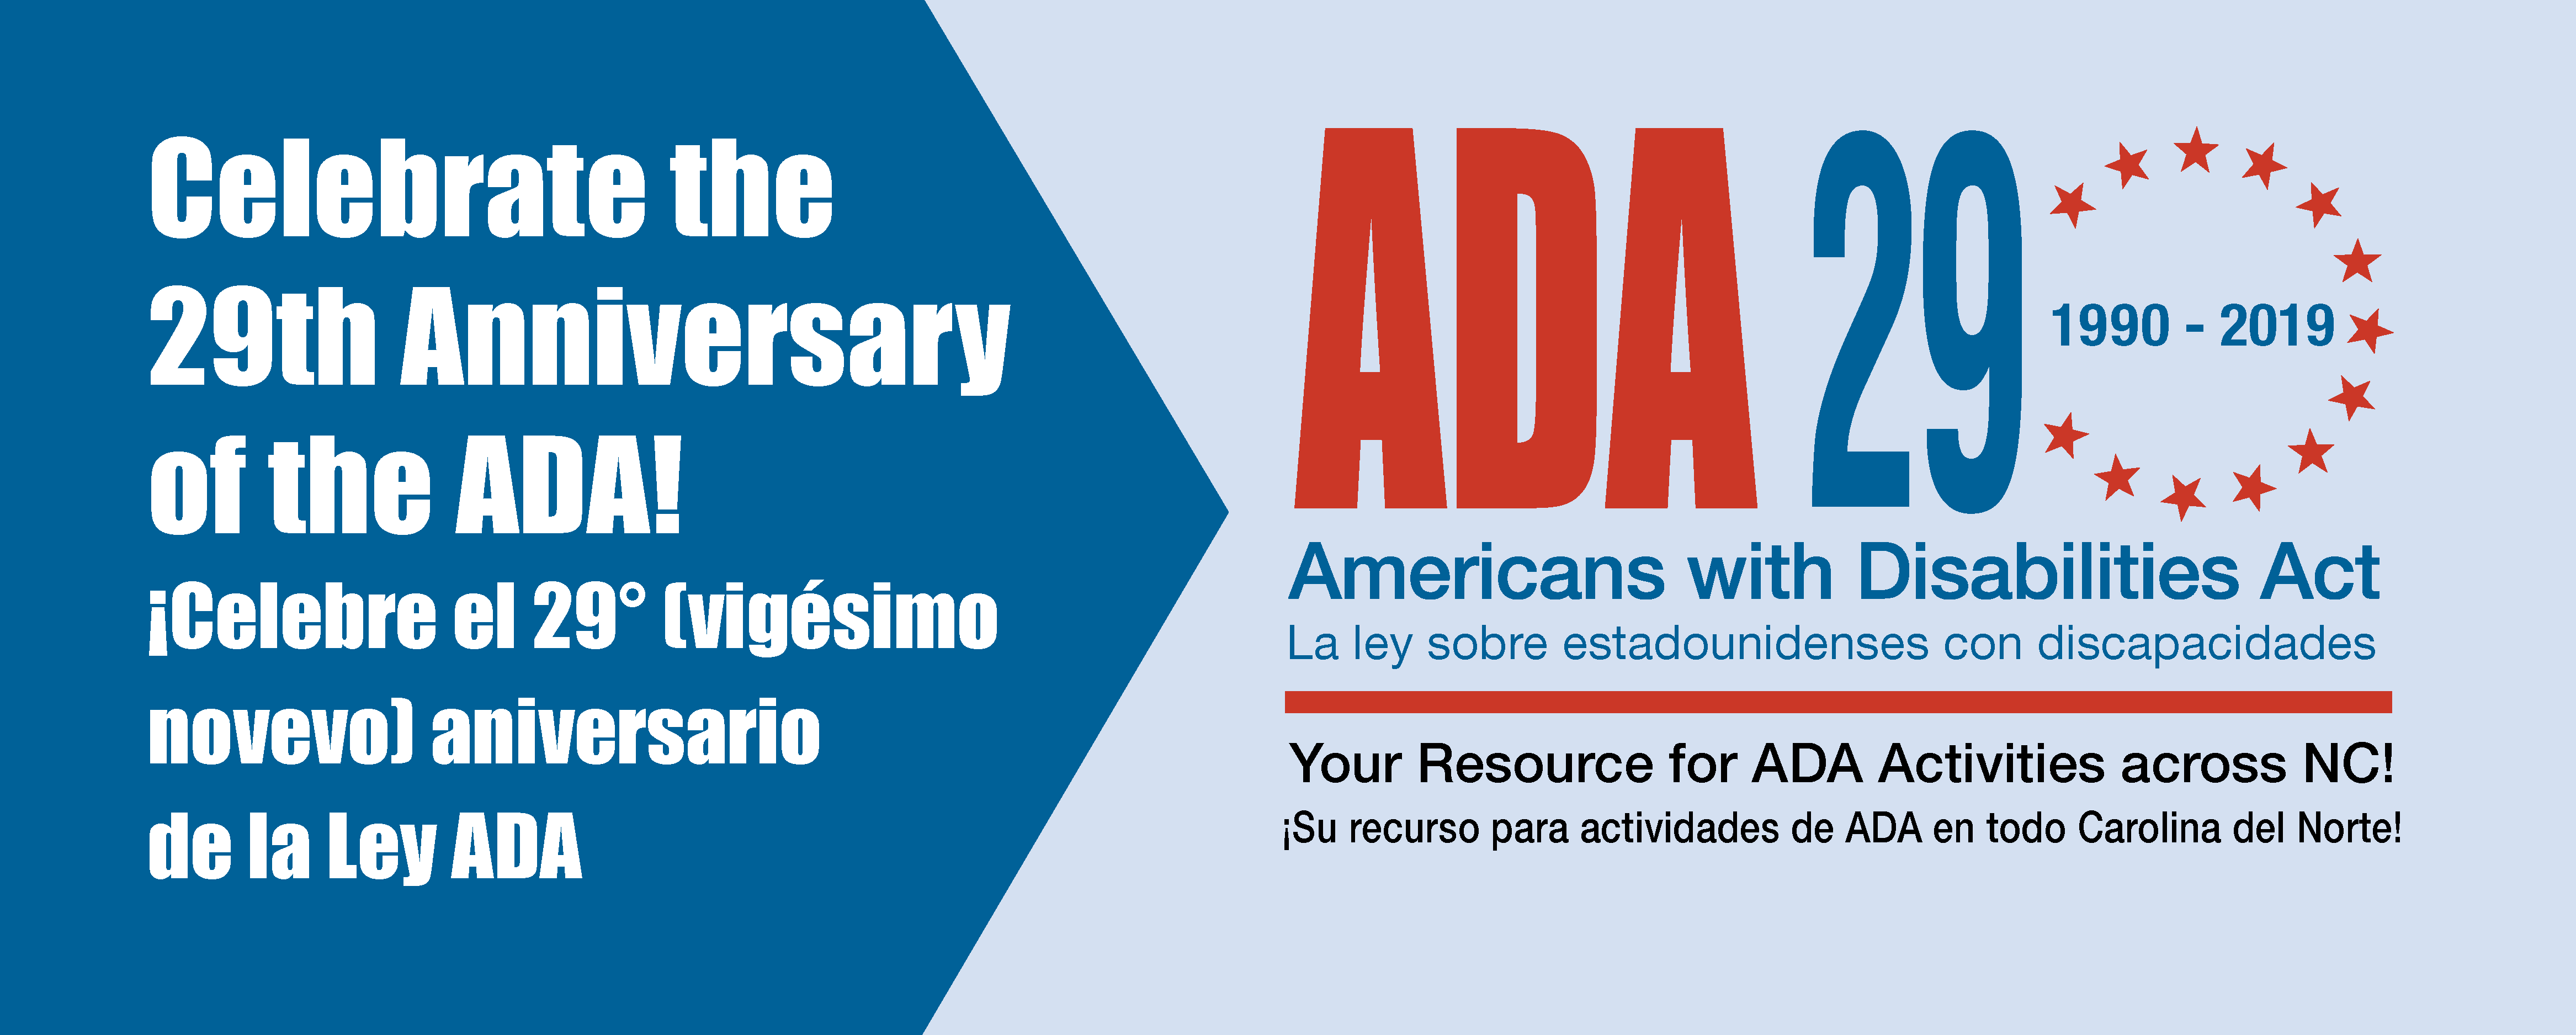 Celebrate the 29th Anniversary of the ADA